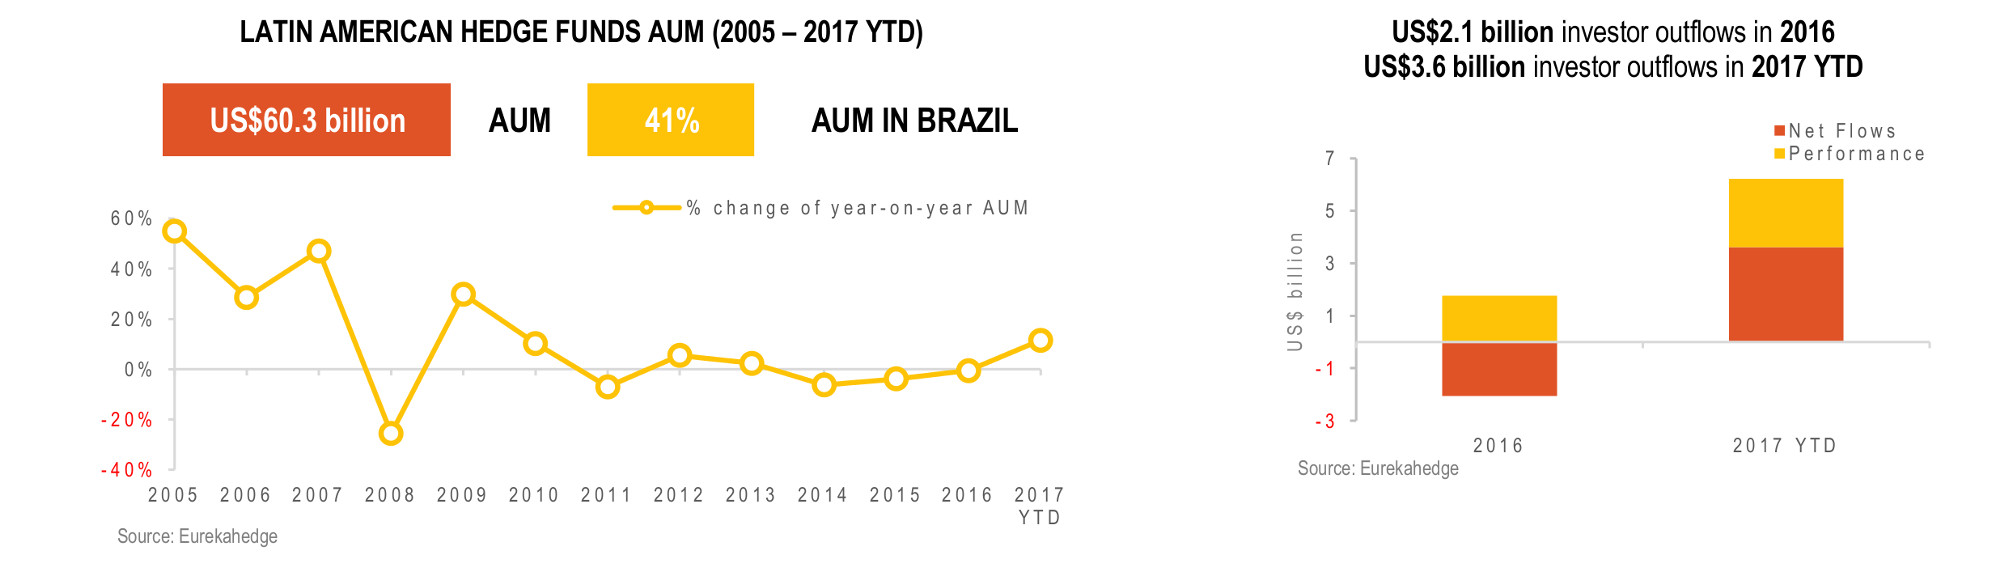 Latin American Hedge Fund Infographic November 2017- AUM